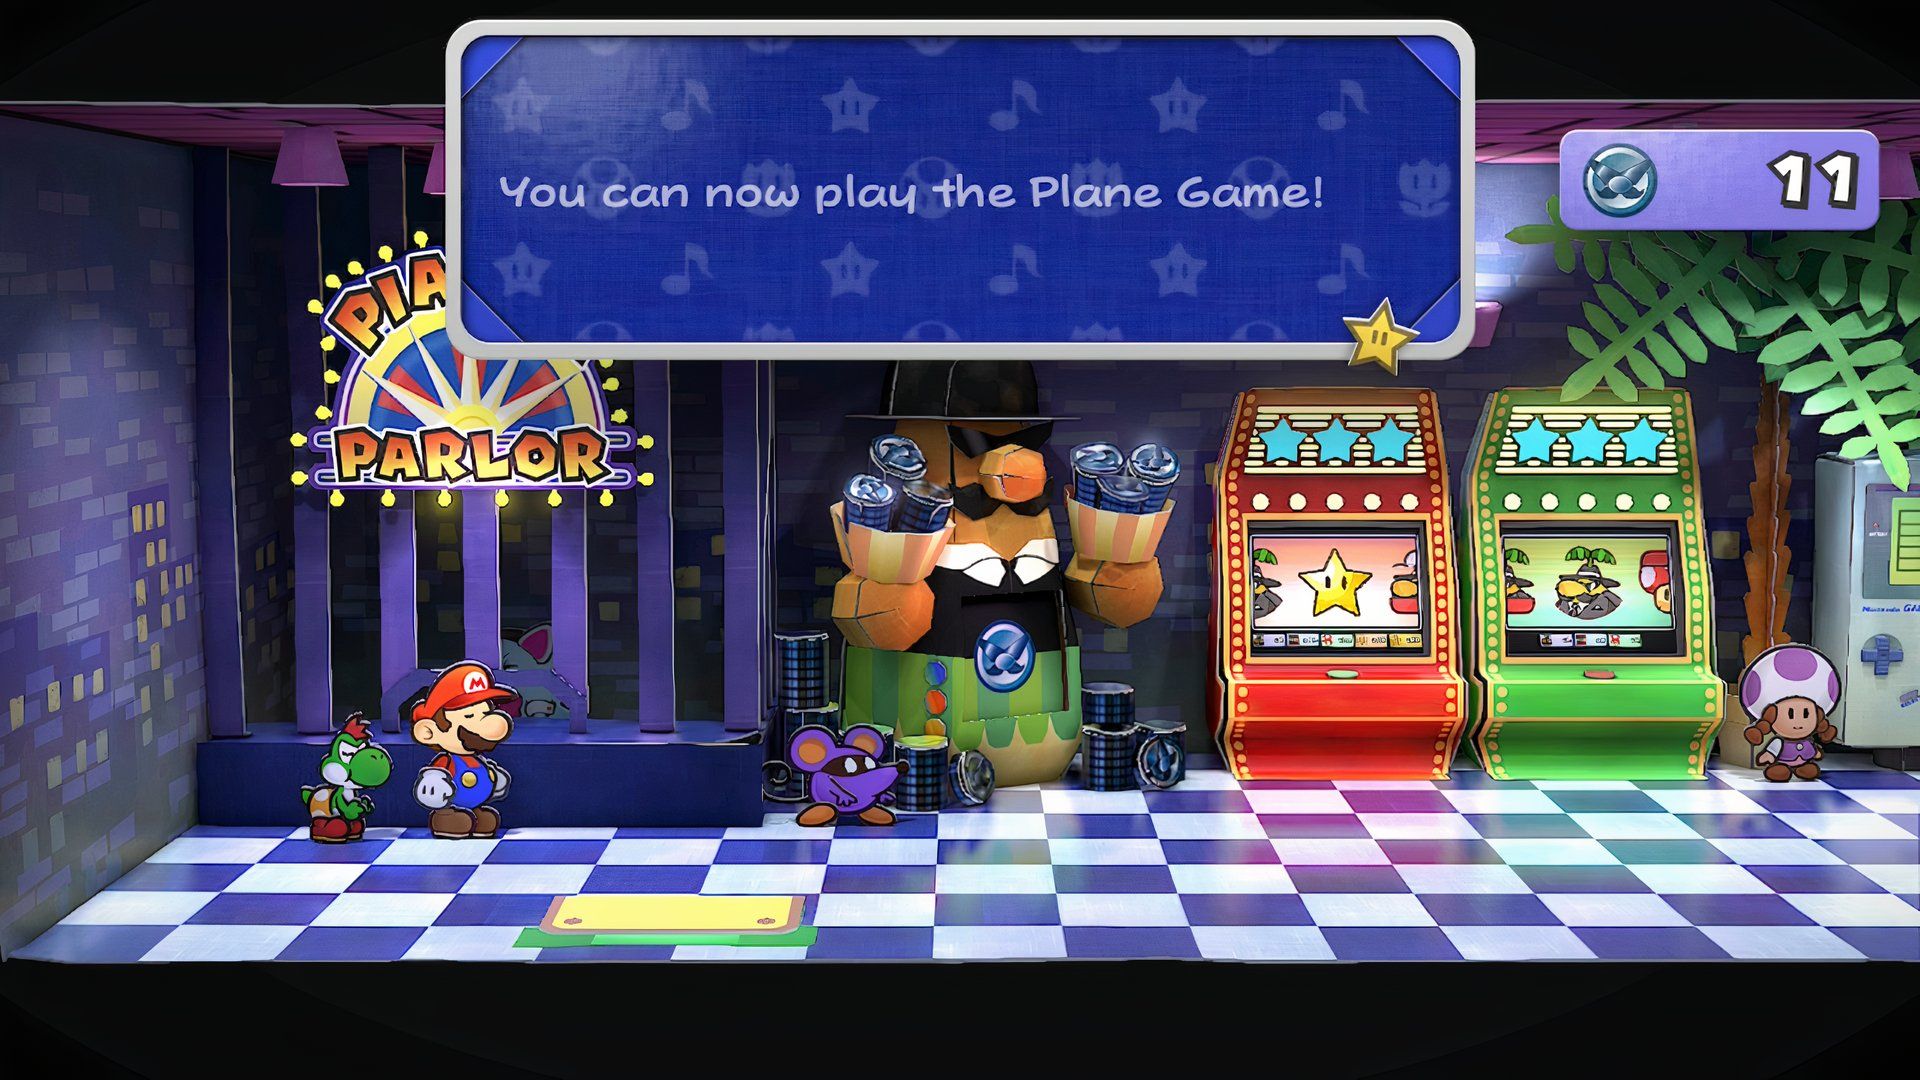 Paper Mario: The Thousand-Year Door - Pianta Parlor Unlock the Plane Game